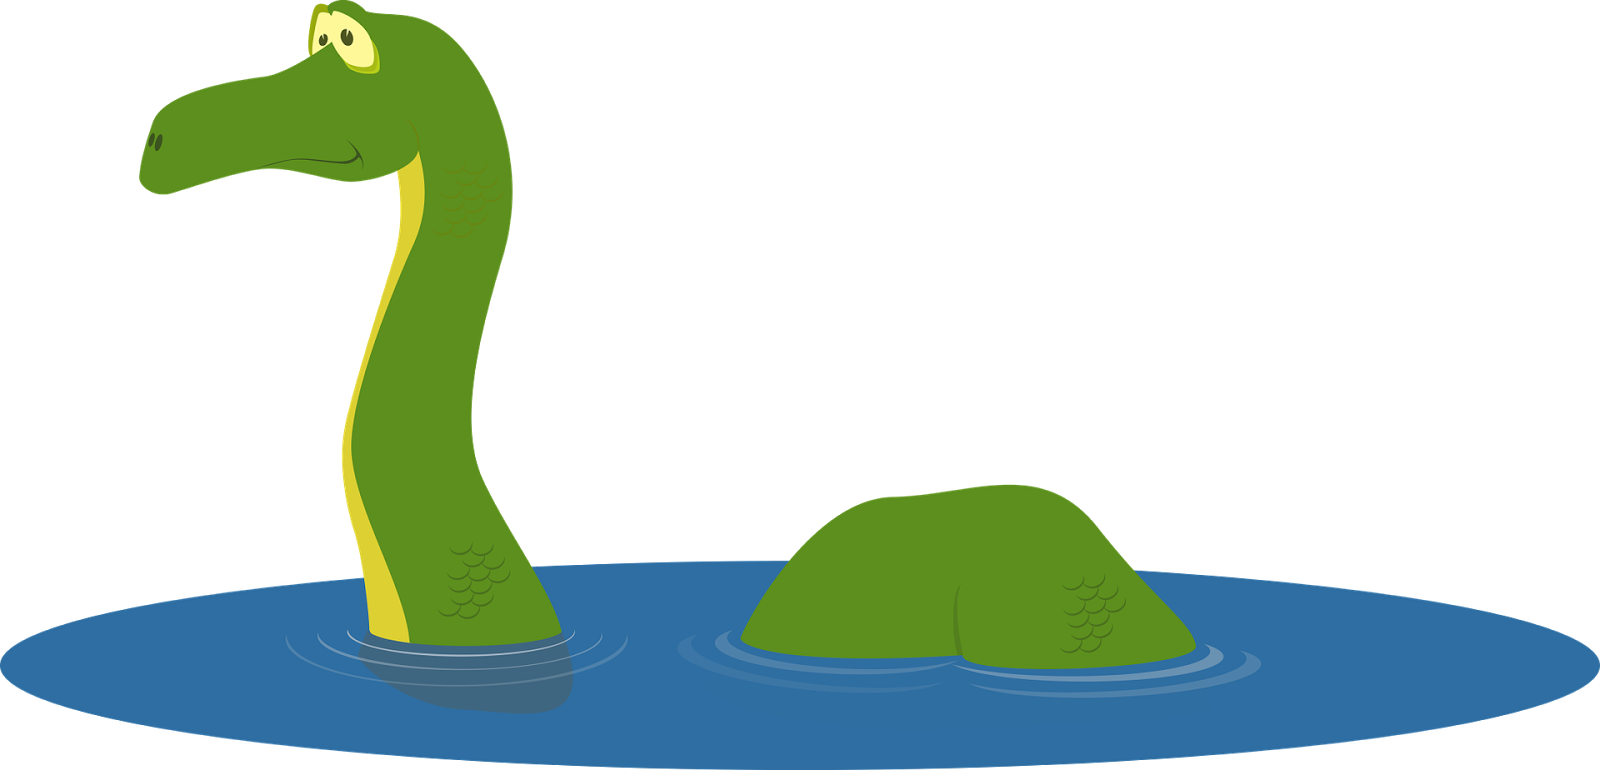 Loch Ness Monster Cartoon Cute Icon Loch N - Transparent Loch Ness Mons...